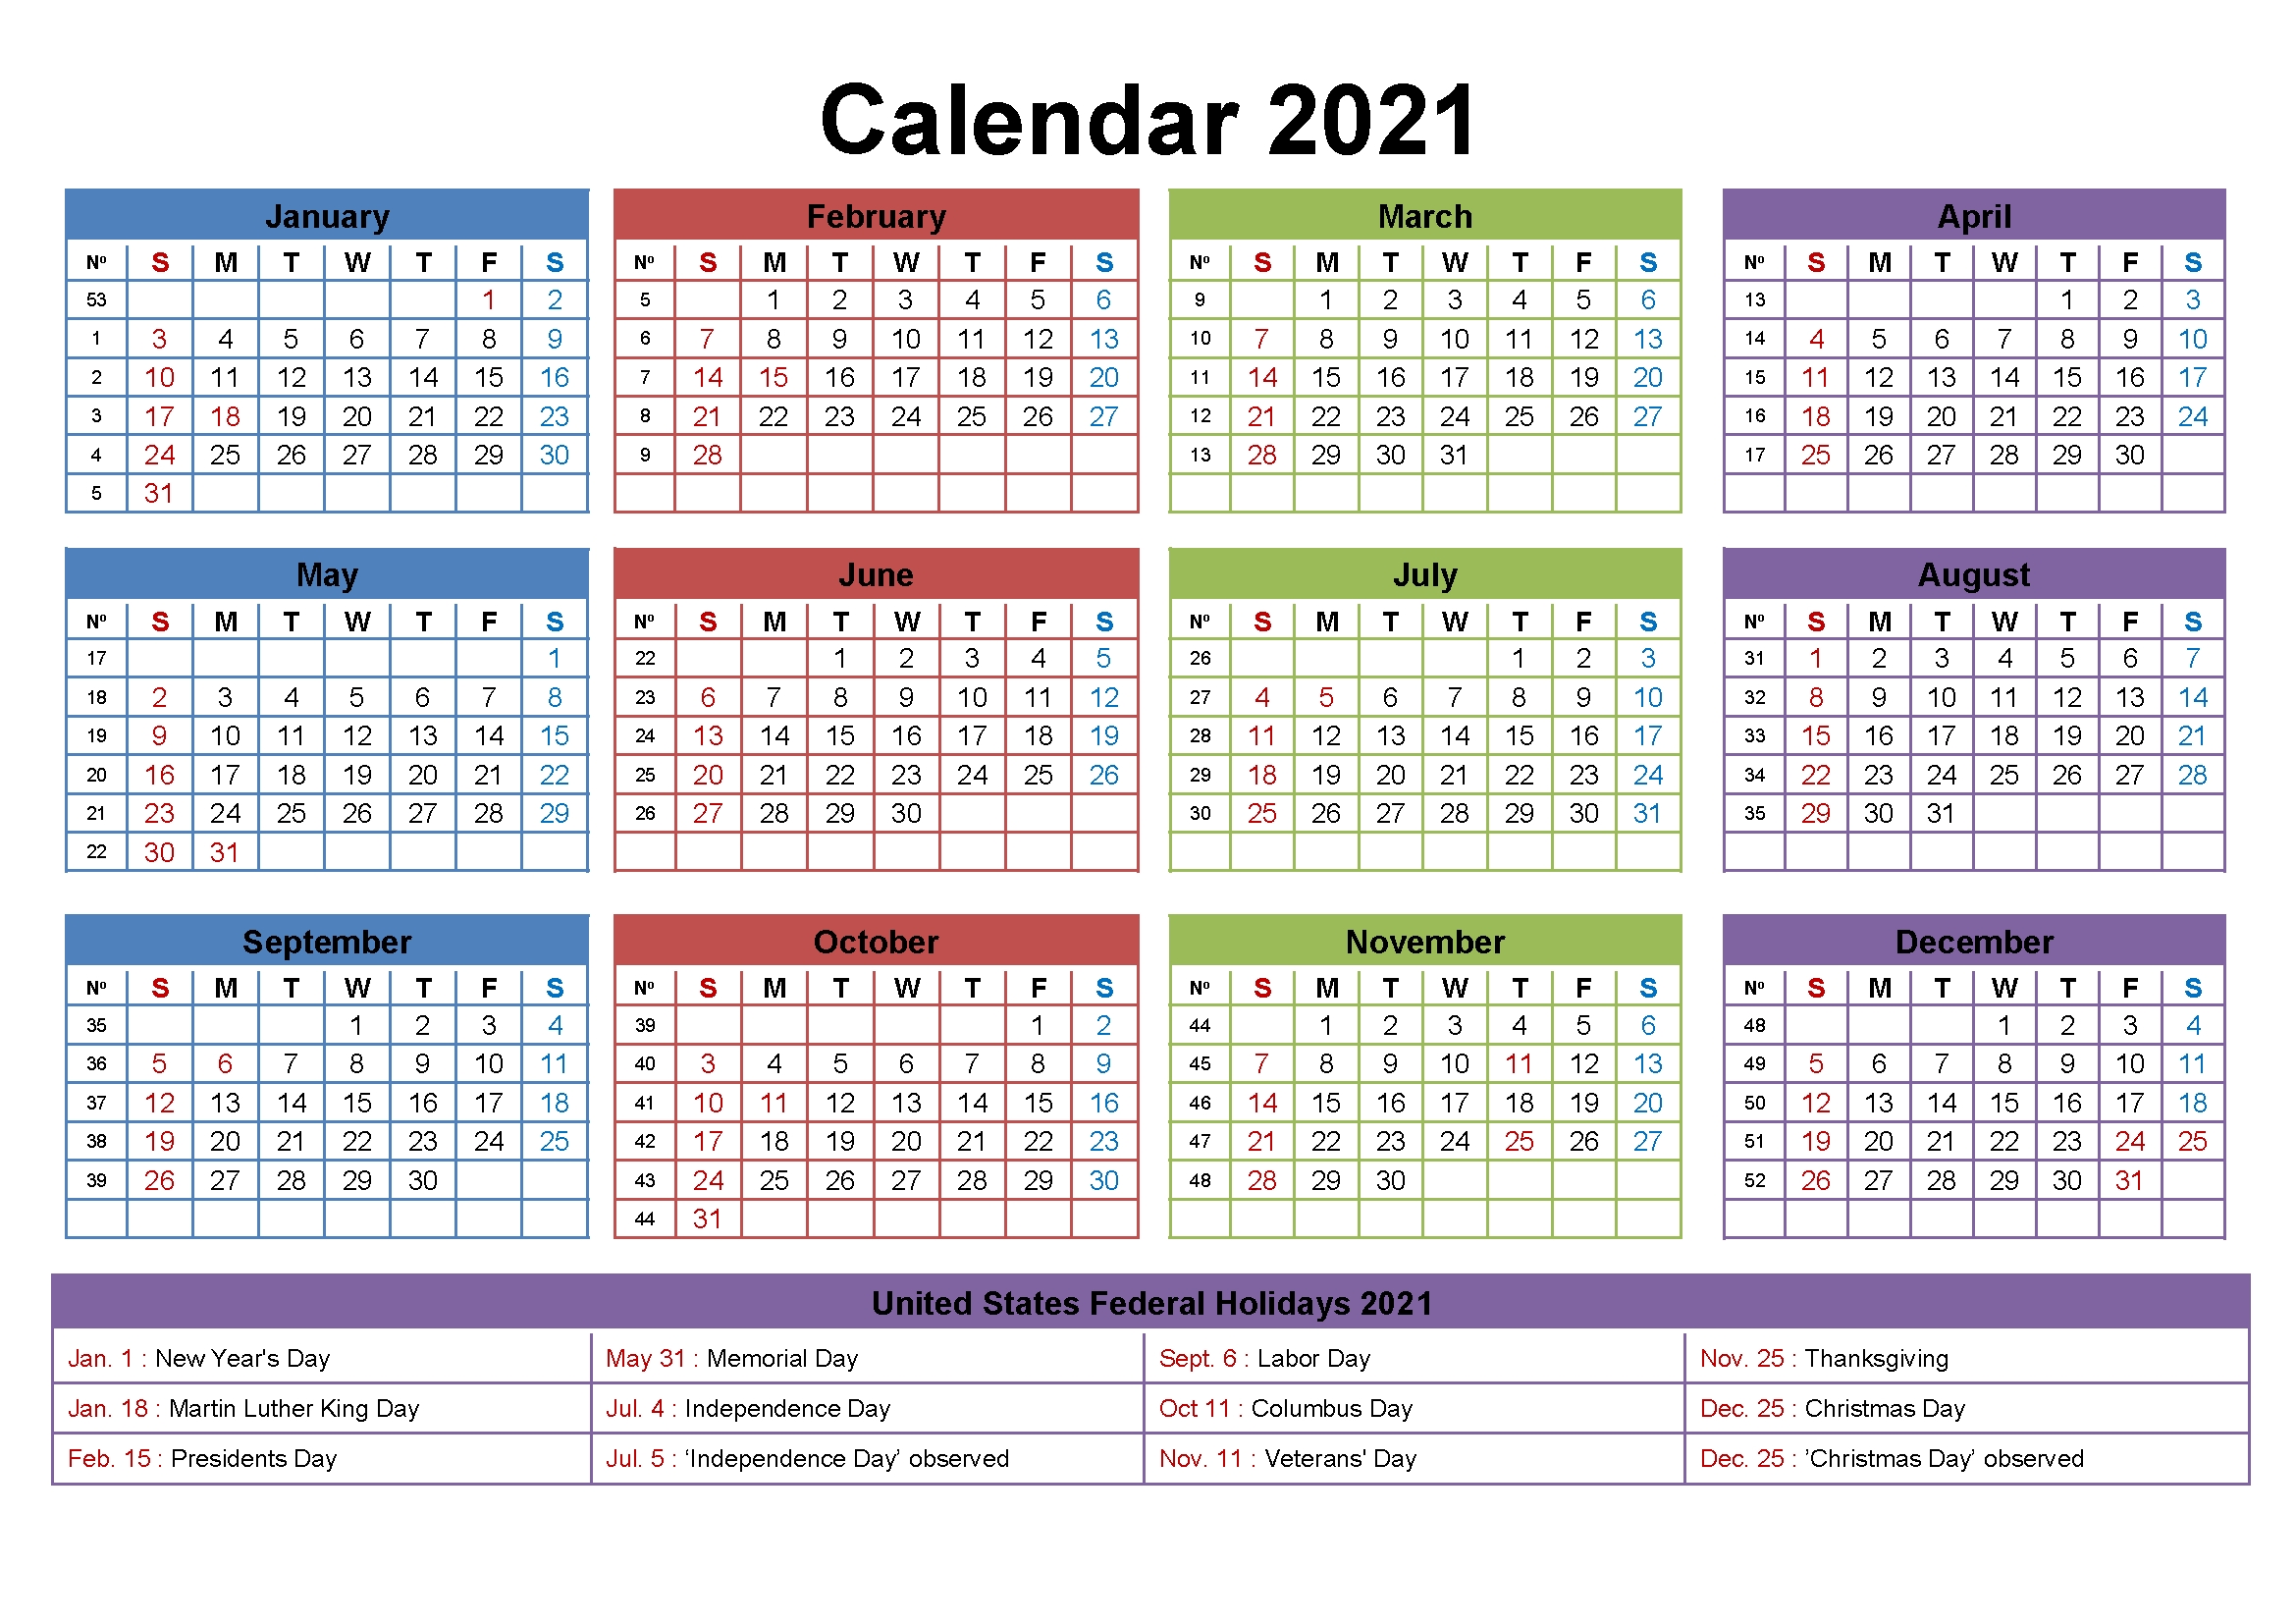 Free Editable 2021 Calendar Printable Template